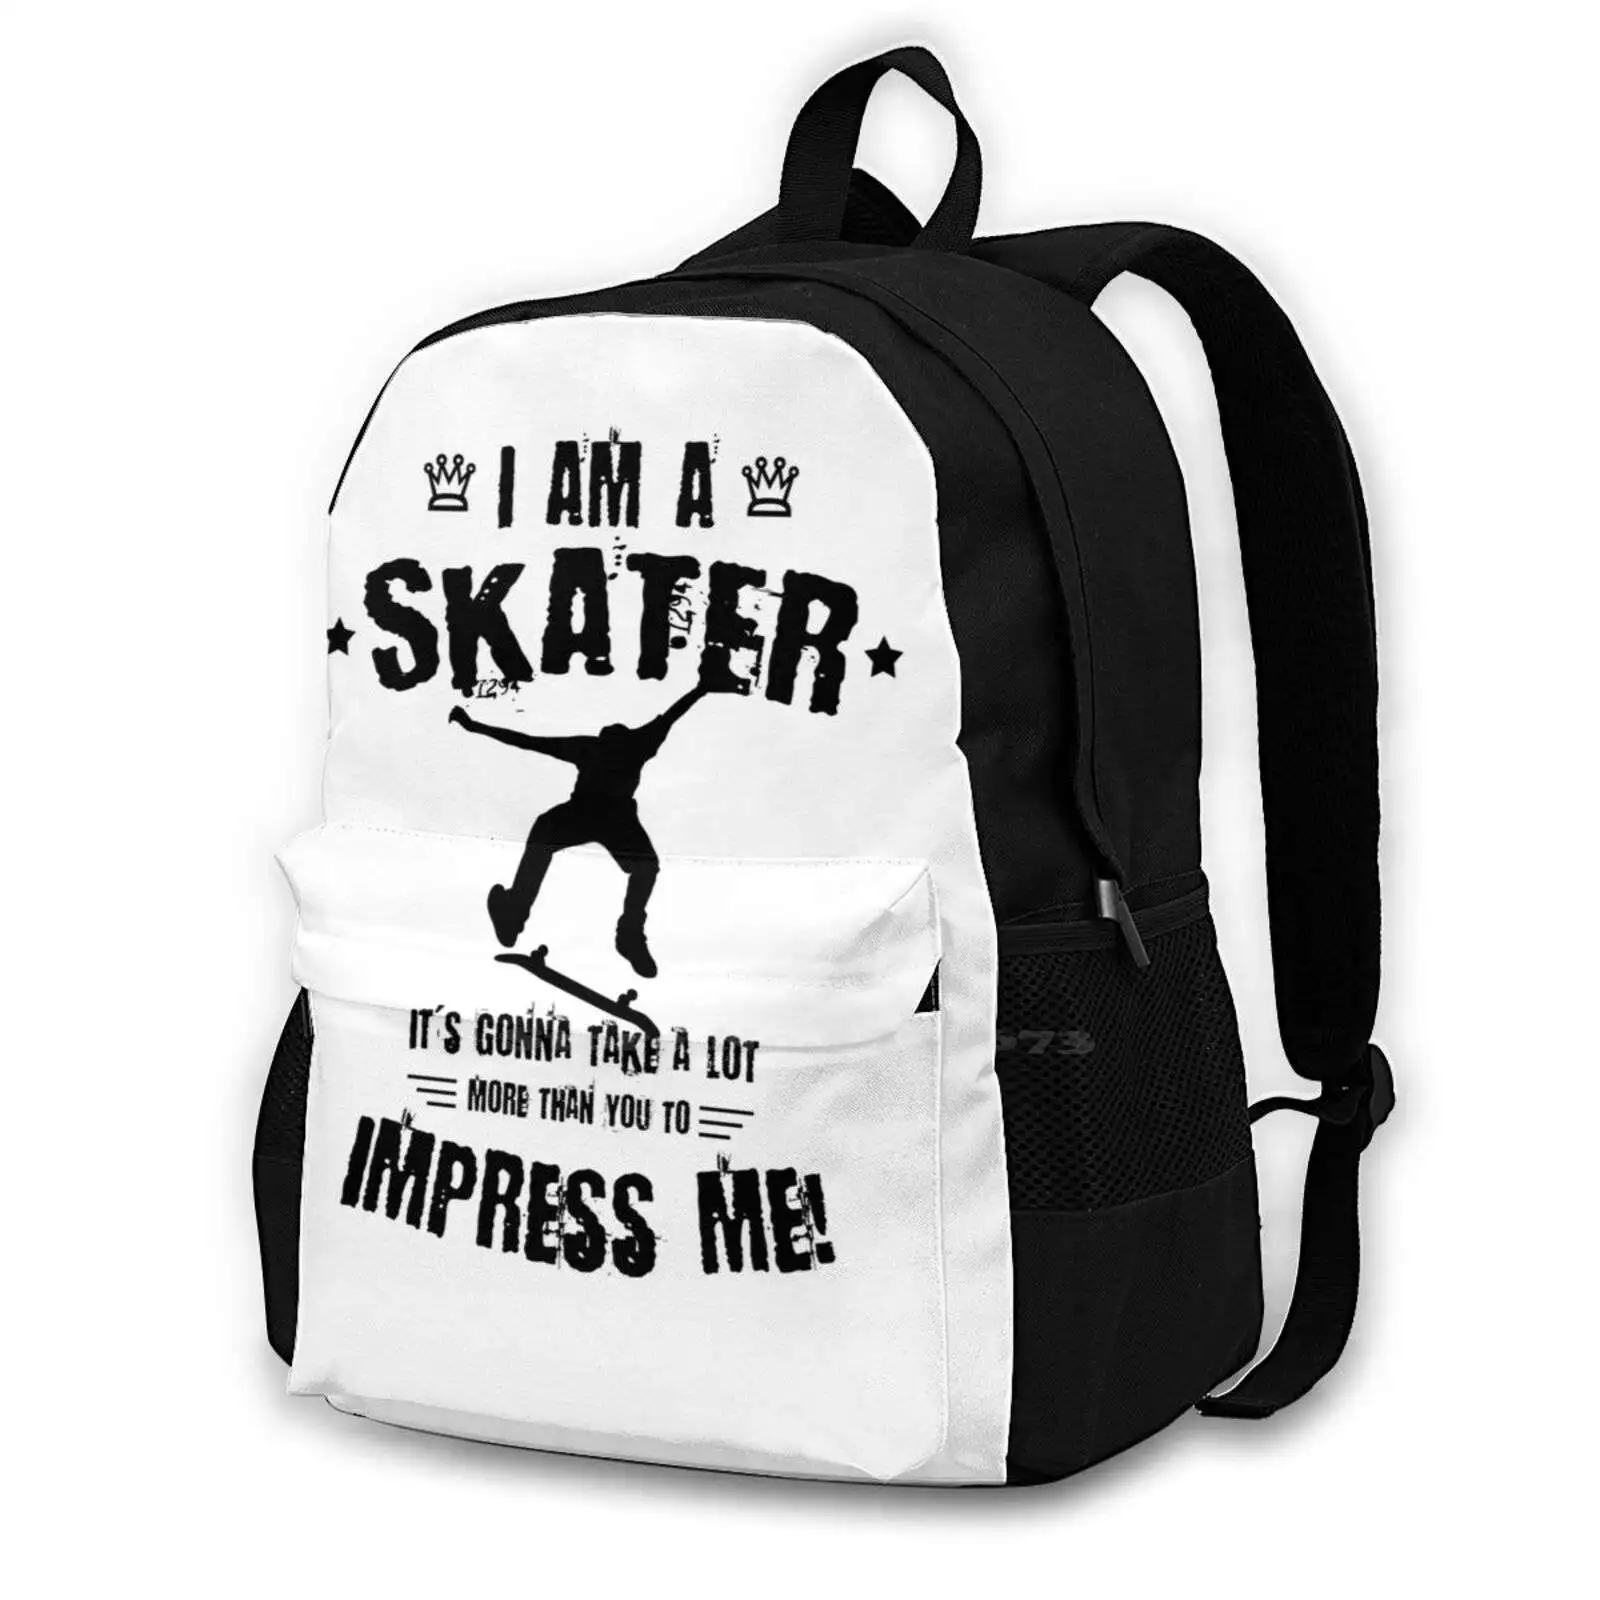 

Skater School Bags For Teenage Girls Laptop Travel Bags Skateboard Longboard Skater Skateboarding Tricks Ollie Kickflip 180